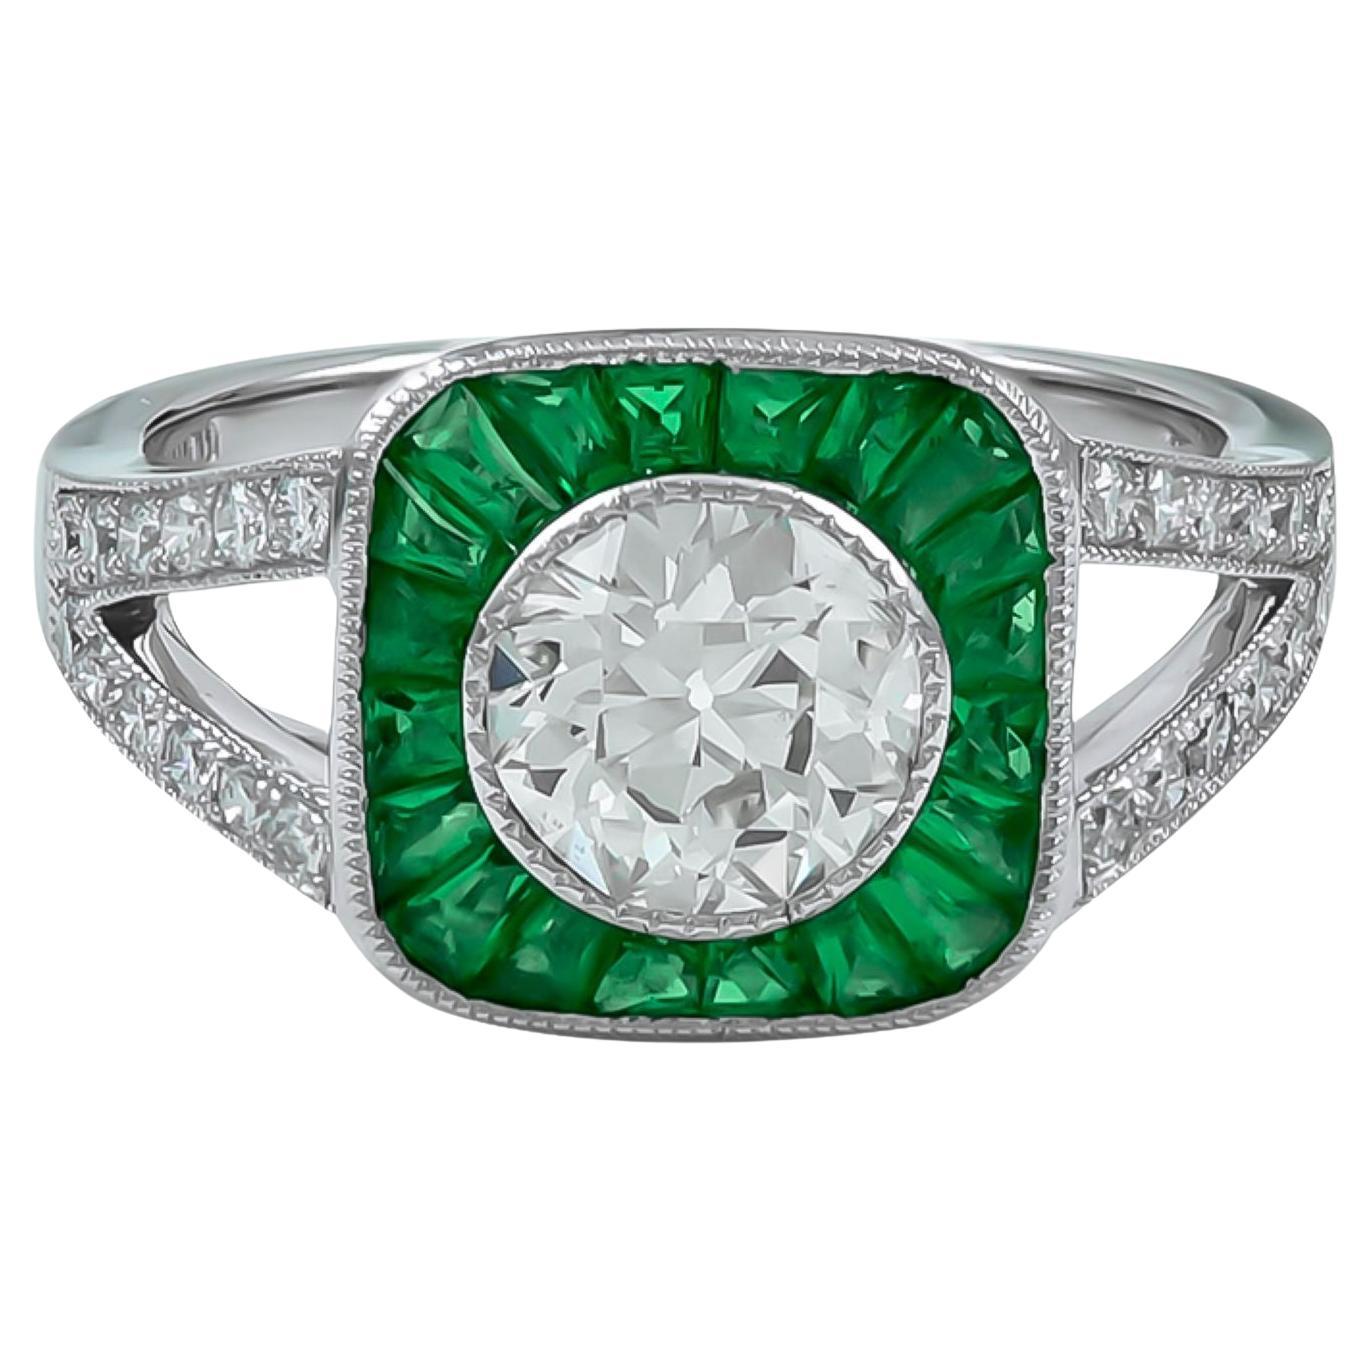 Sophia D. 1,08 Karat Diamant-Ring mit Smaragd im Art déco-Stil